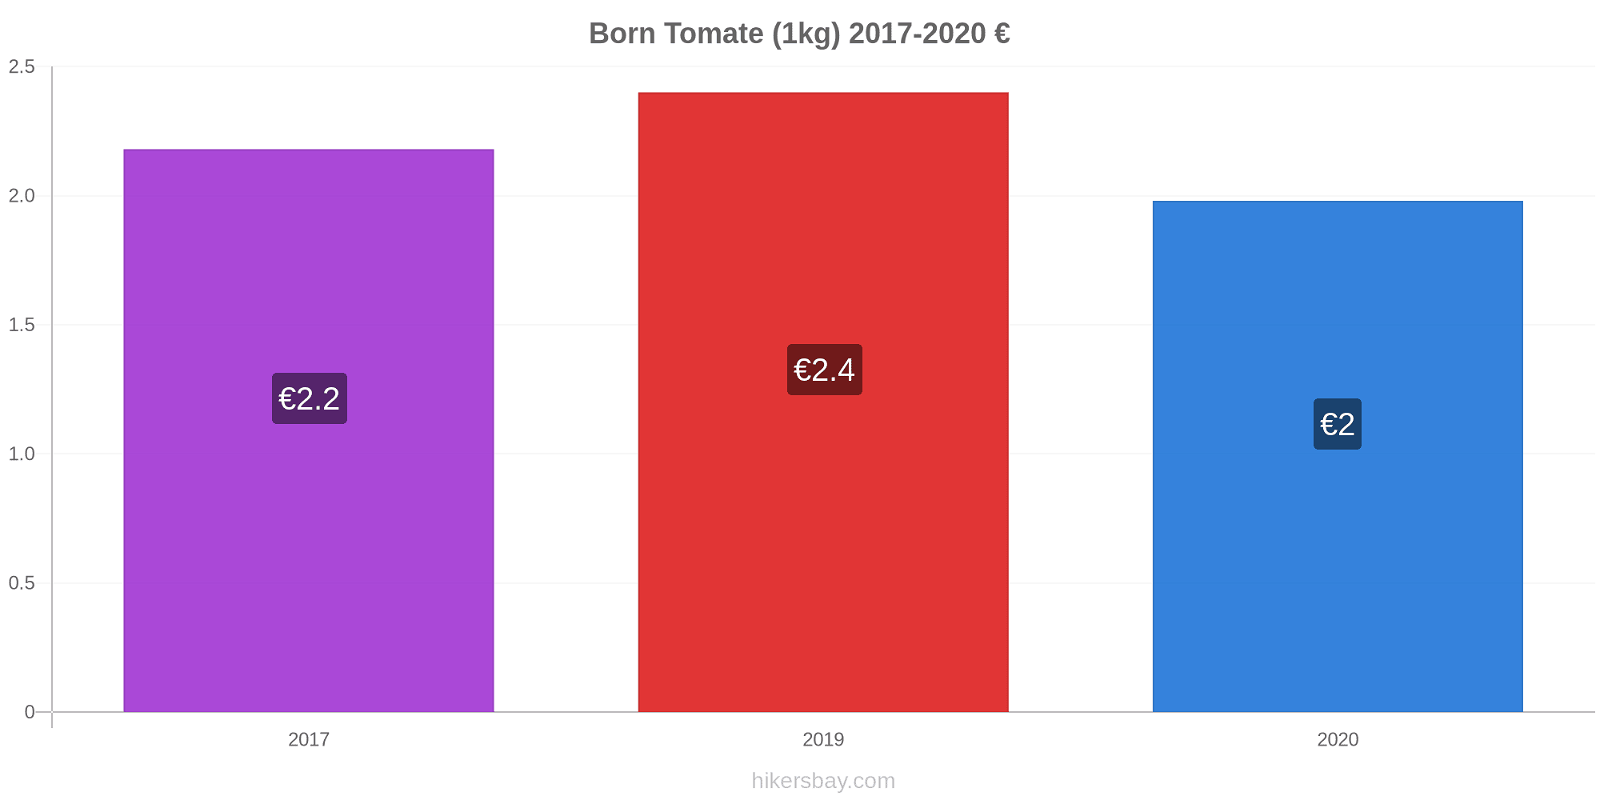 Born Preisänderungen Tomaten (1kg) hikersbay.com